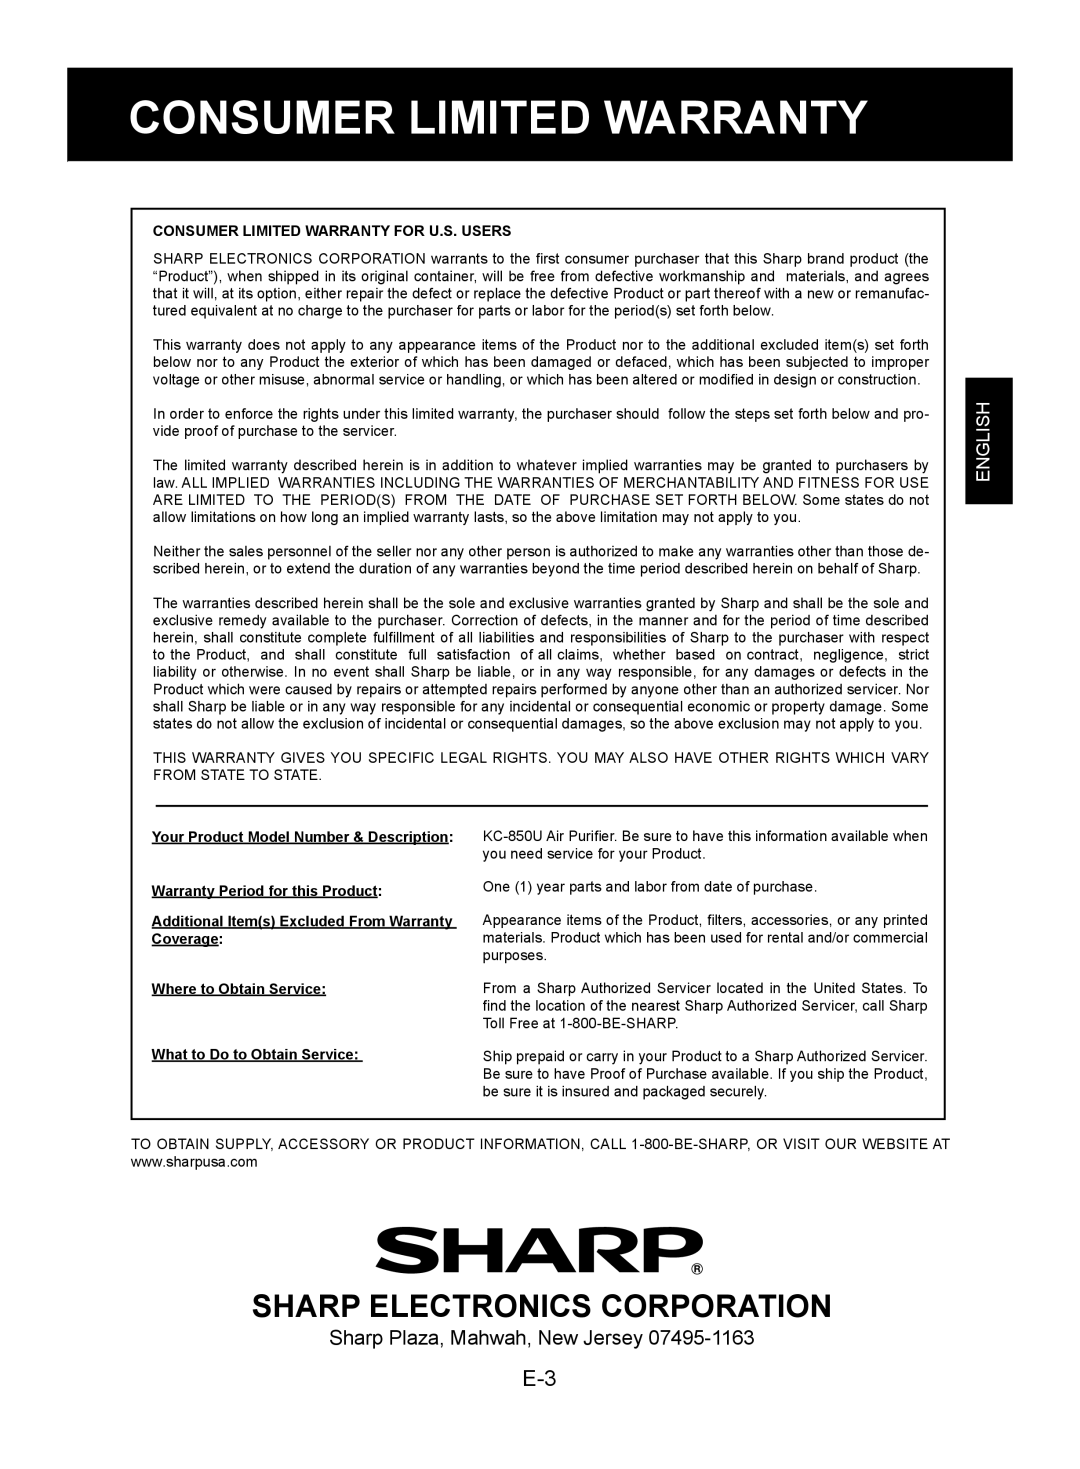 Sharp KC-850U operation manual Sharp Electronics Corporation, English, Consumer Limited Warranty For U.S. Users 